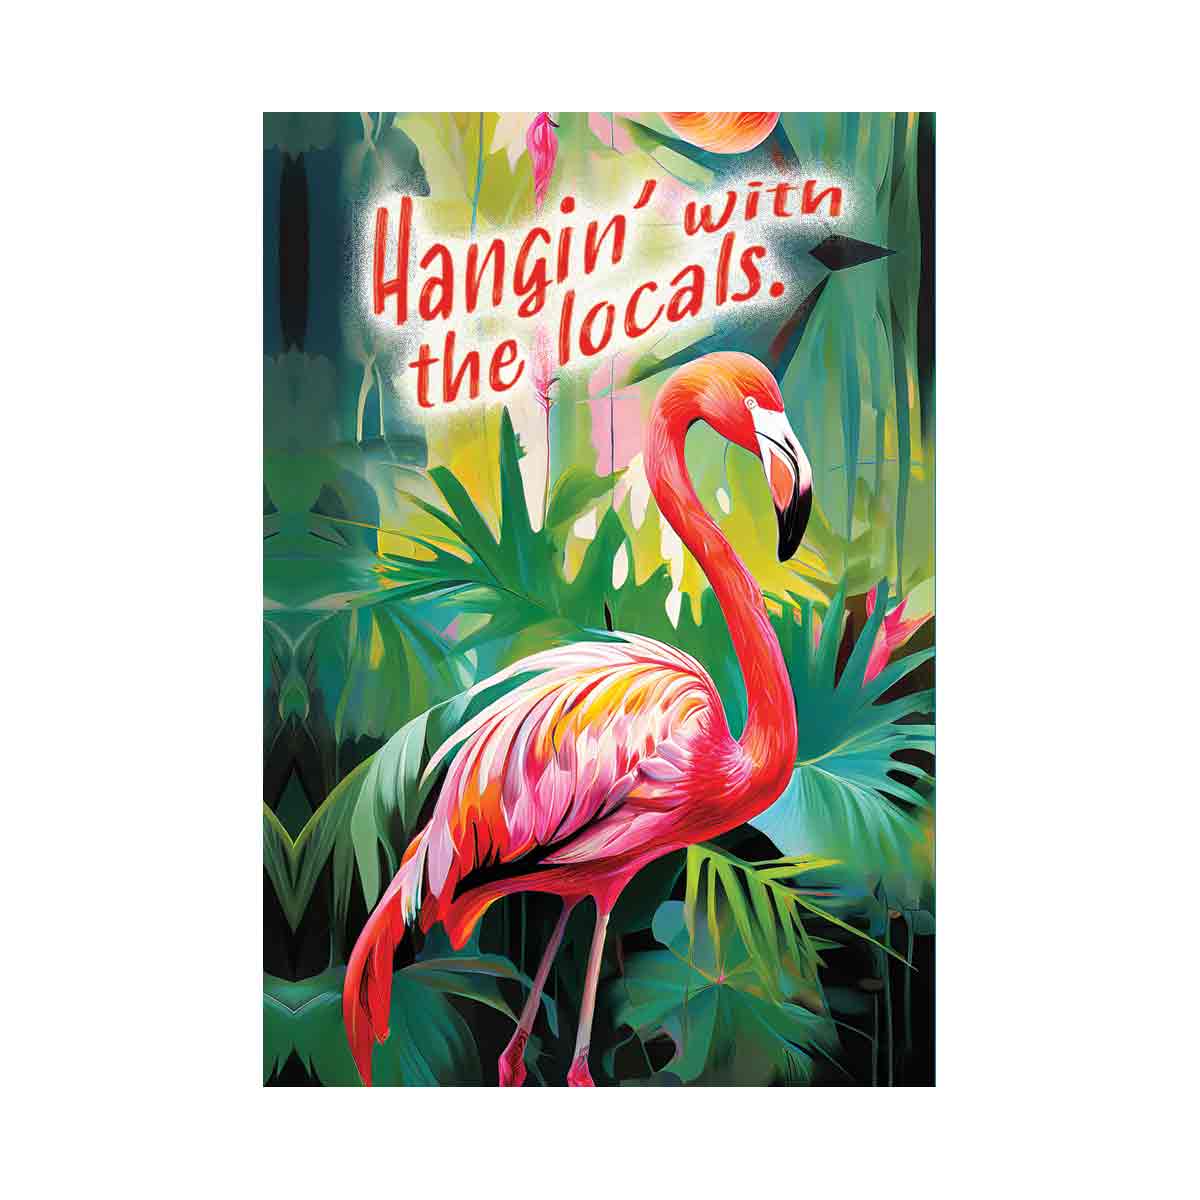 Hangin' with the locals   Flamingo